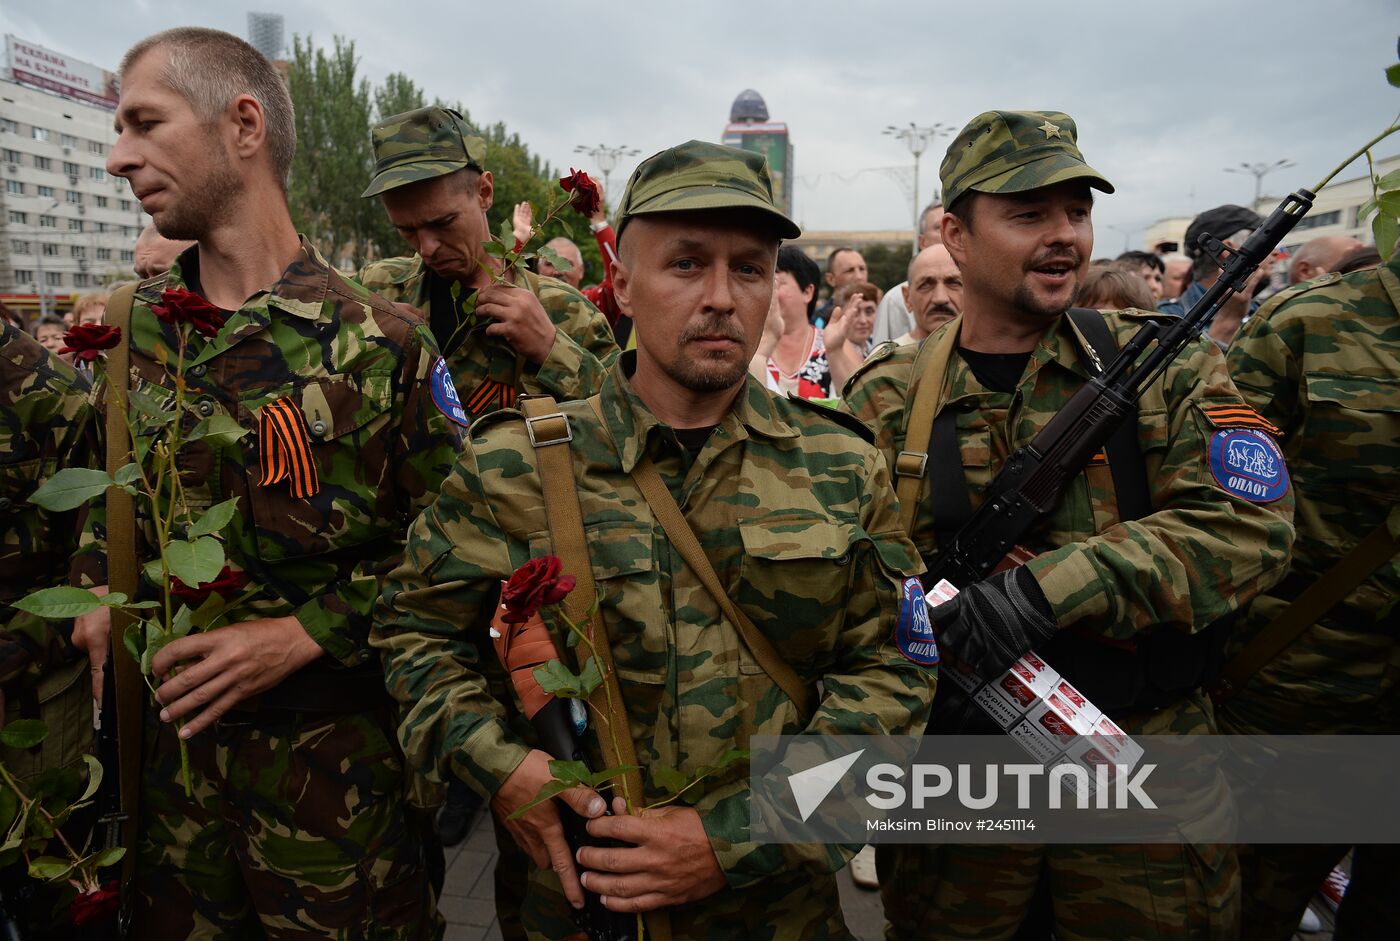 Donbass militia i nDonetsk take oath for service